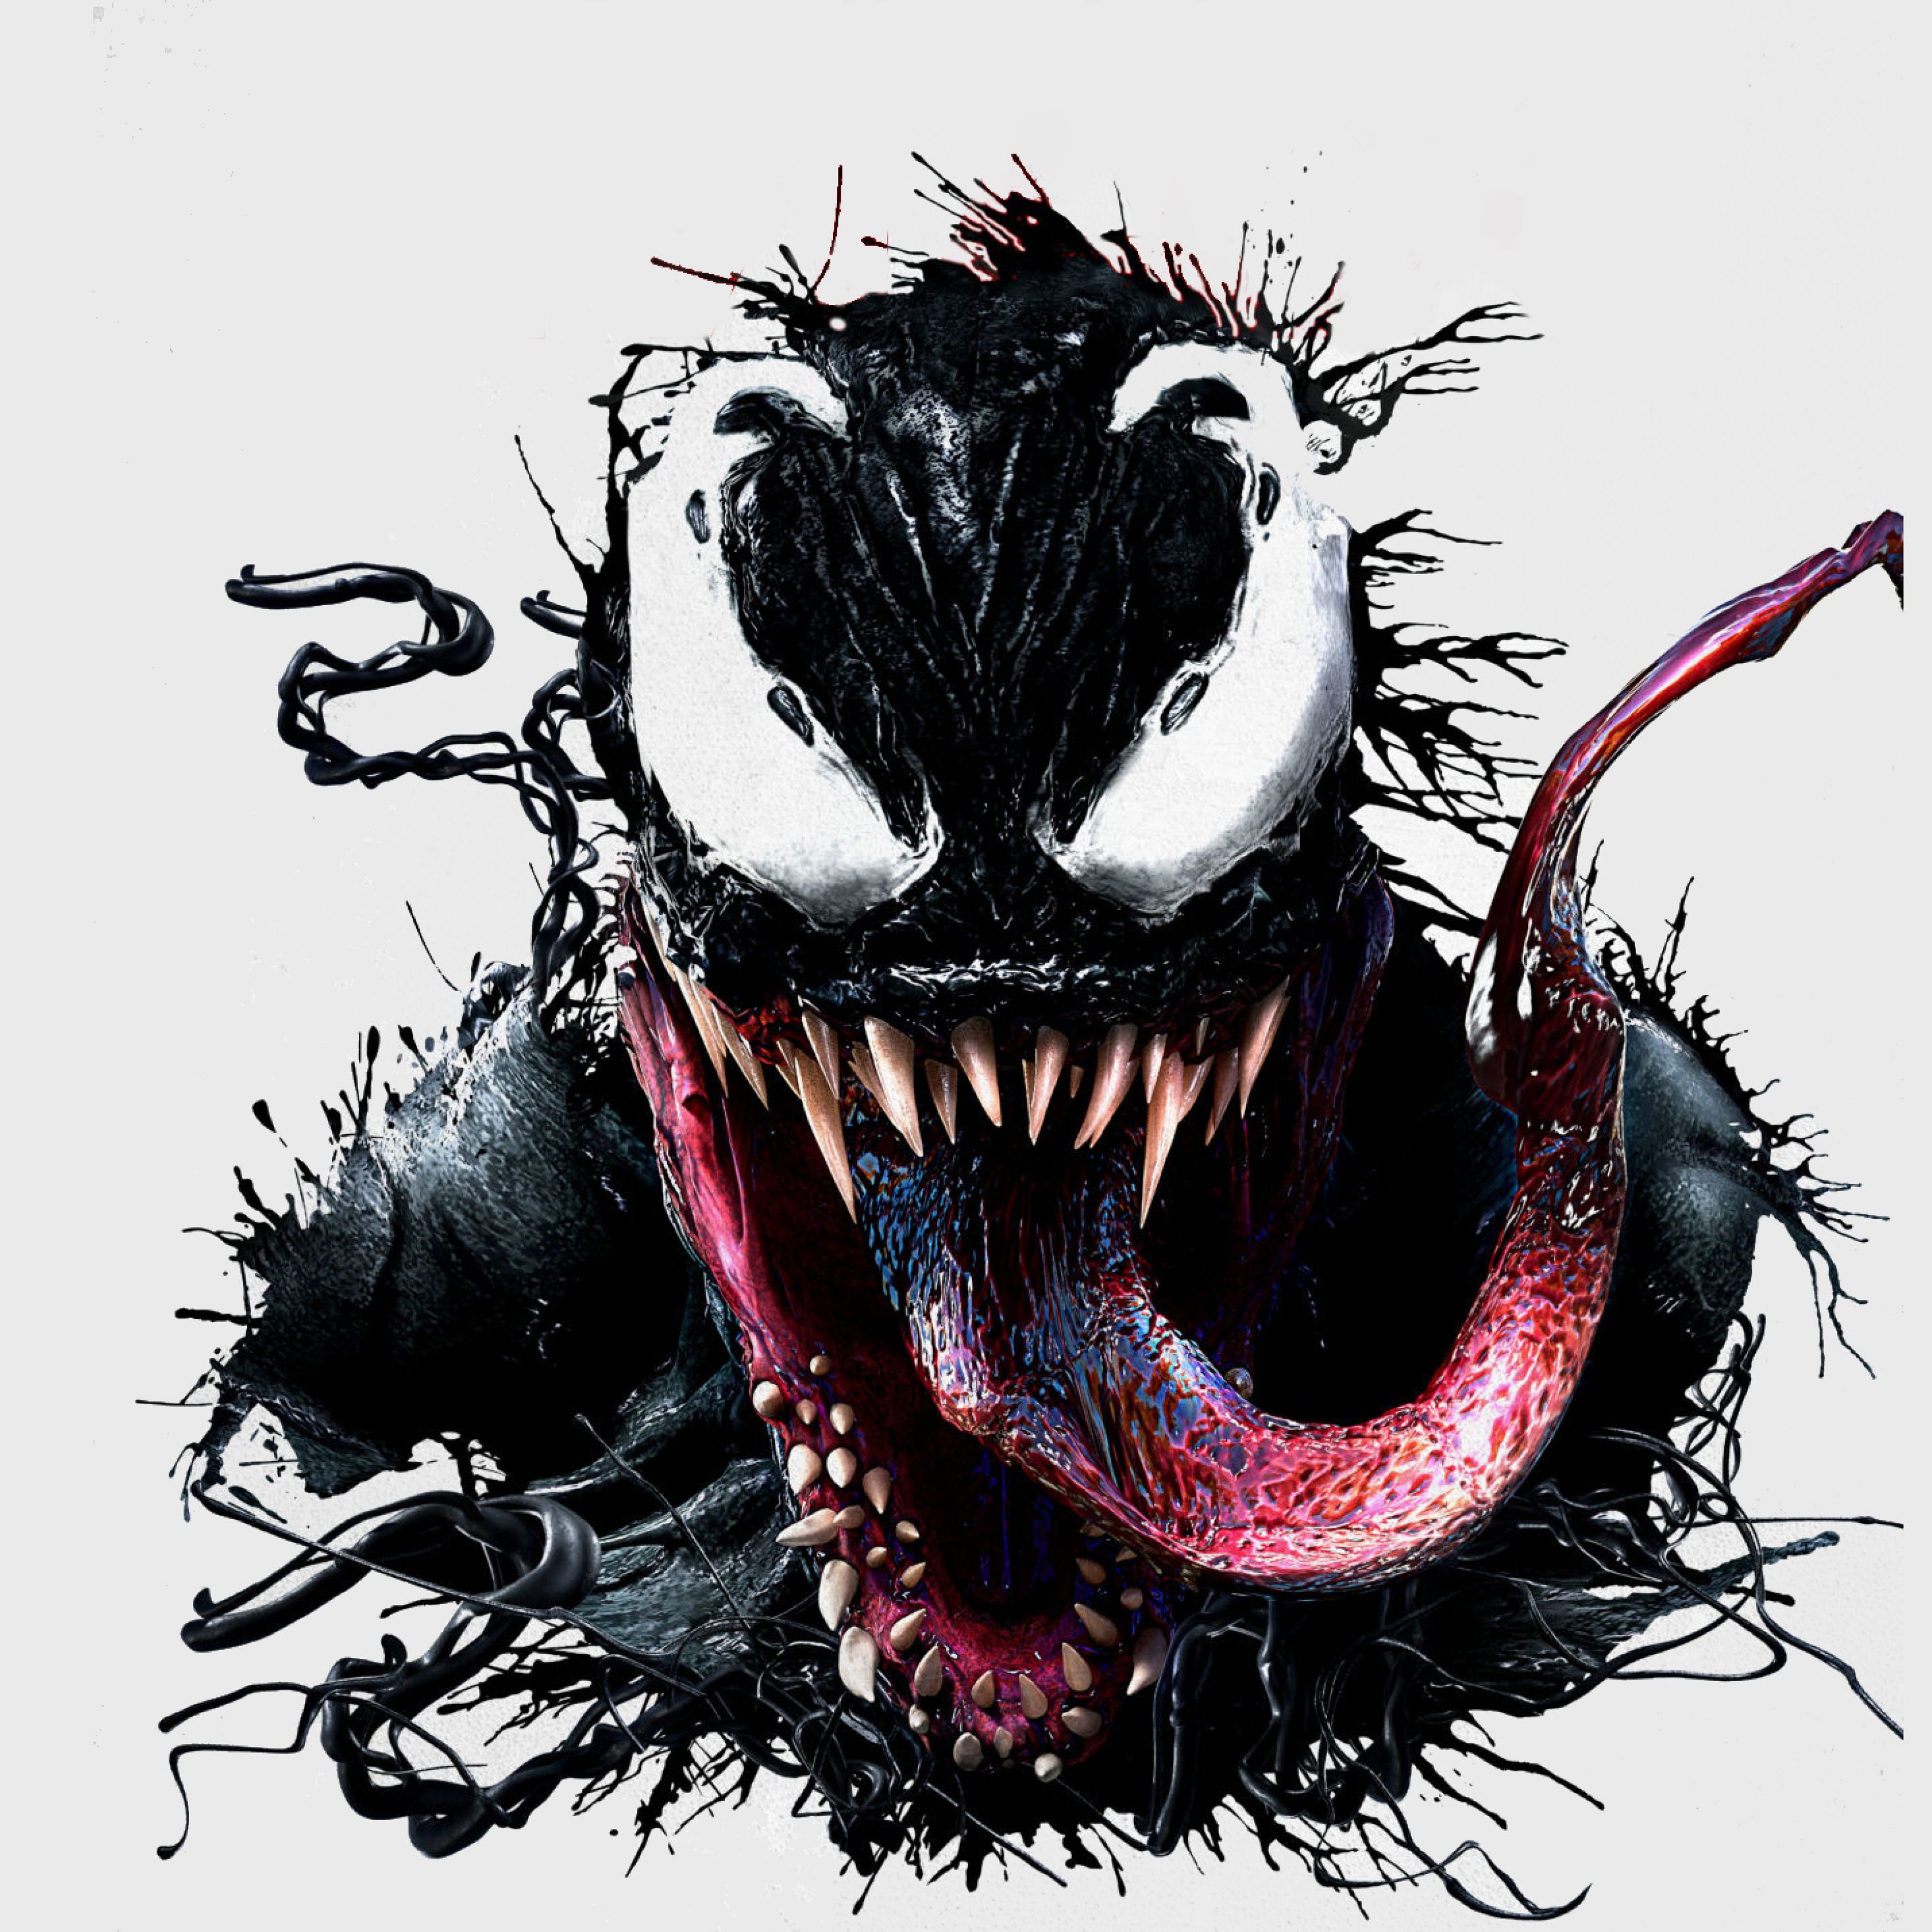 Venom 2018 Movie IMAX Poster iPad Pro Retina Display Wallpaper, HD Movies 4K Wallpaper, Image, Photo and Background